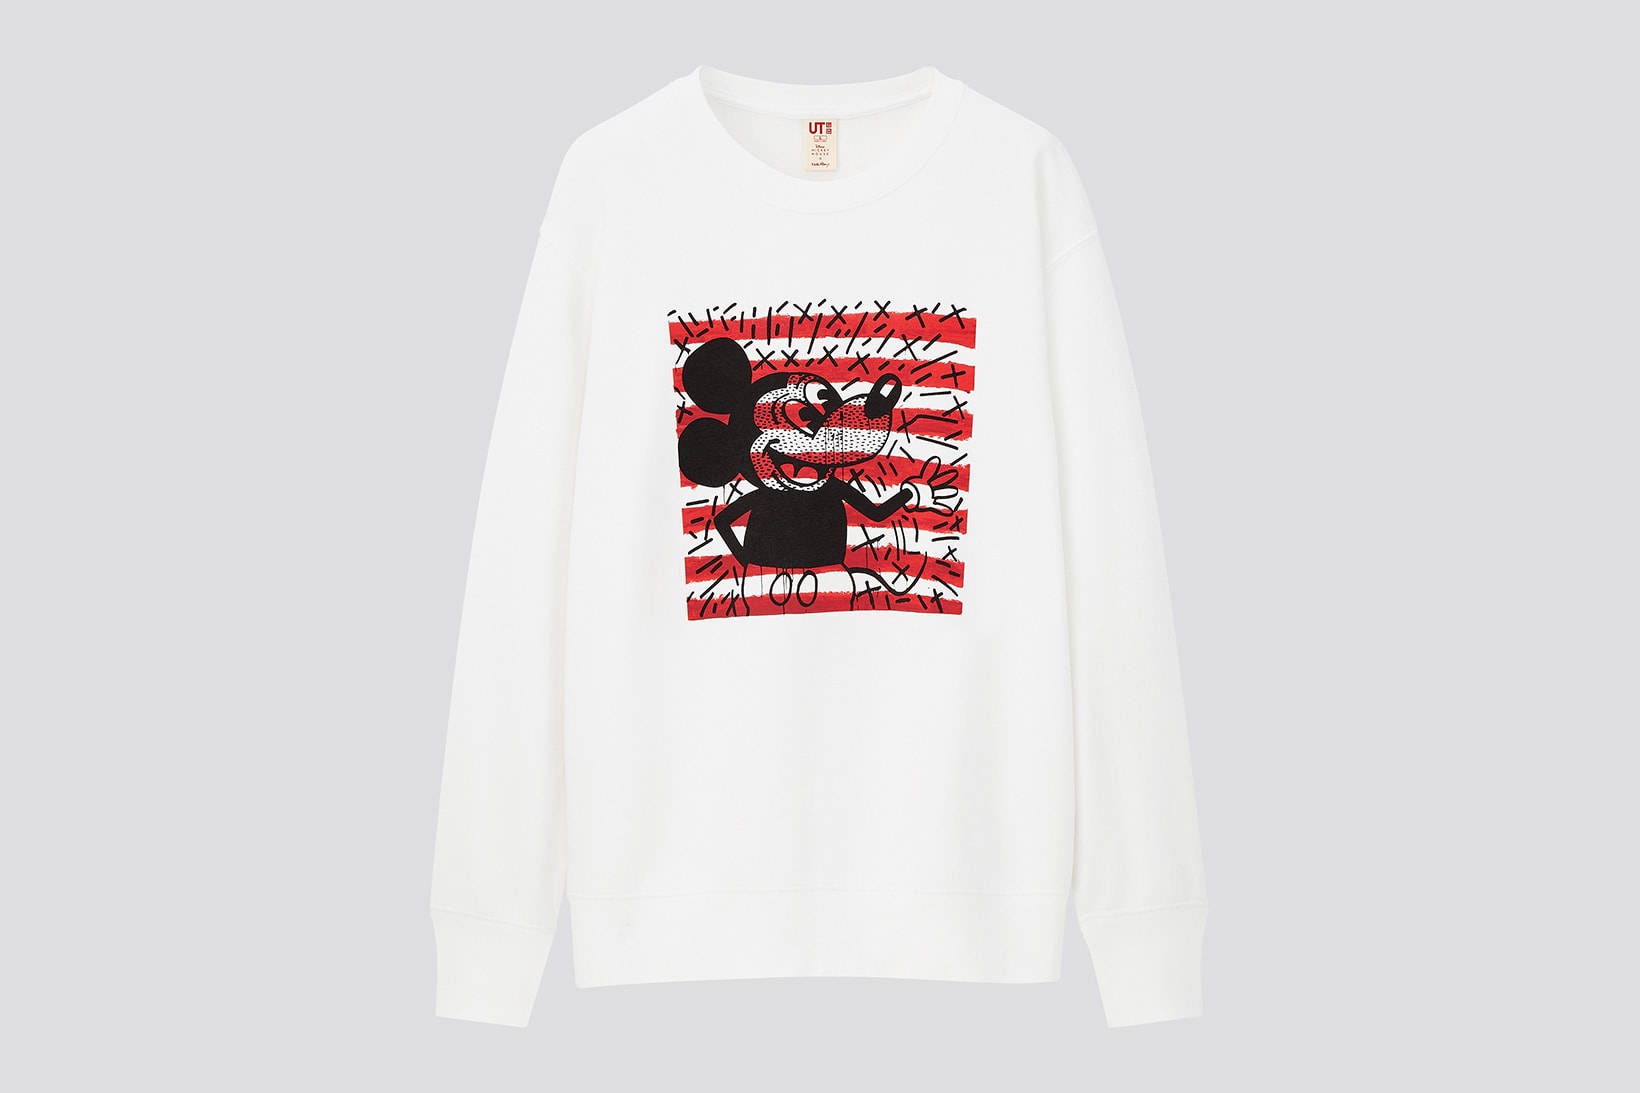 keith haring uniqlo ut mickey mouse t-shirts sweatshirts crewnecks collaboration pop artist